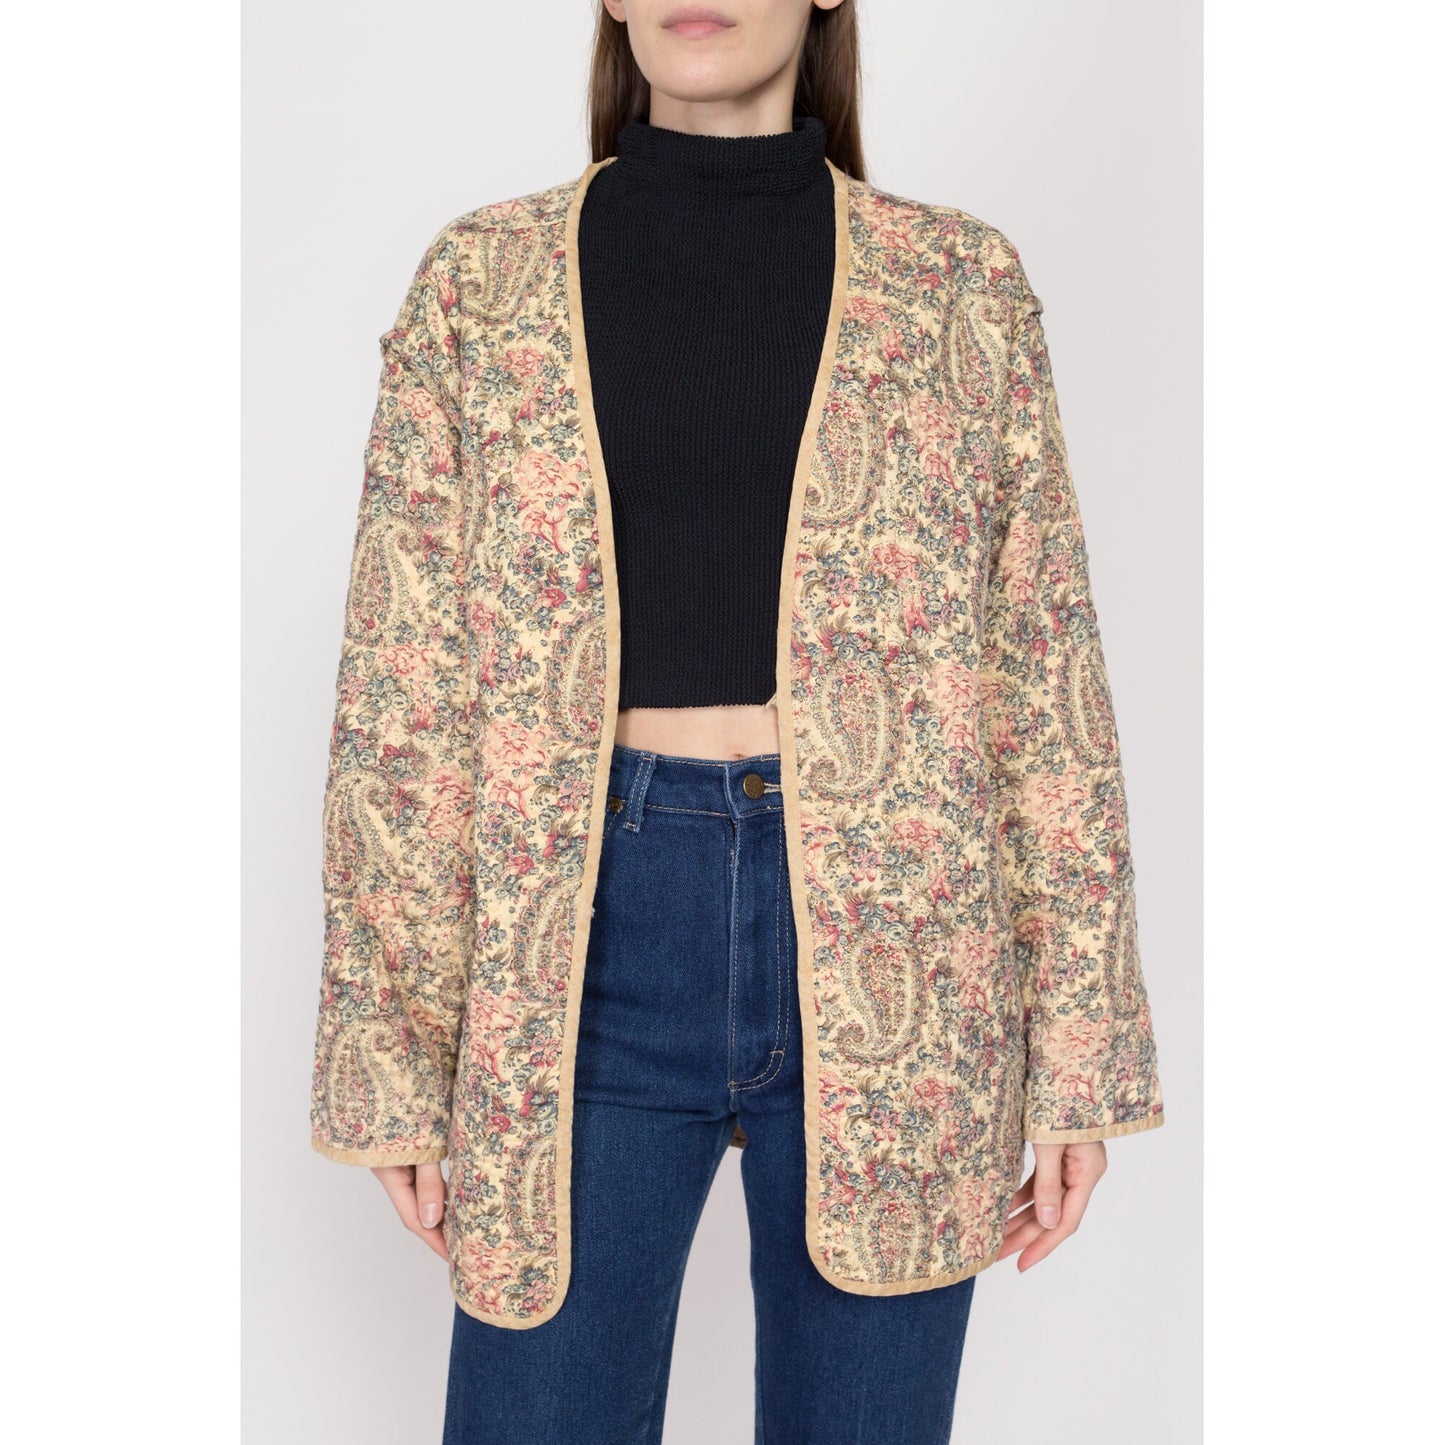 XL-3XL 70s Boho Reversible Patchwork Jacket | Vintage Floral Paisley Print Lightweight Quilted Hippie Coat